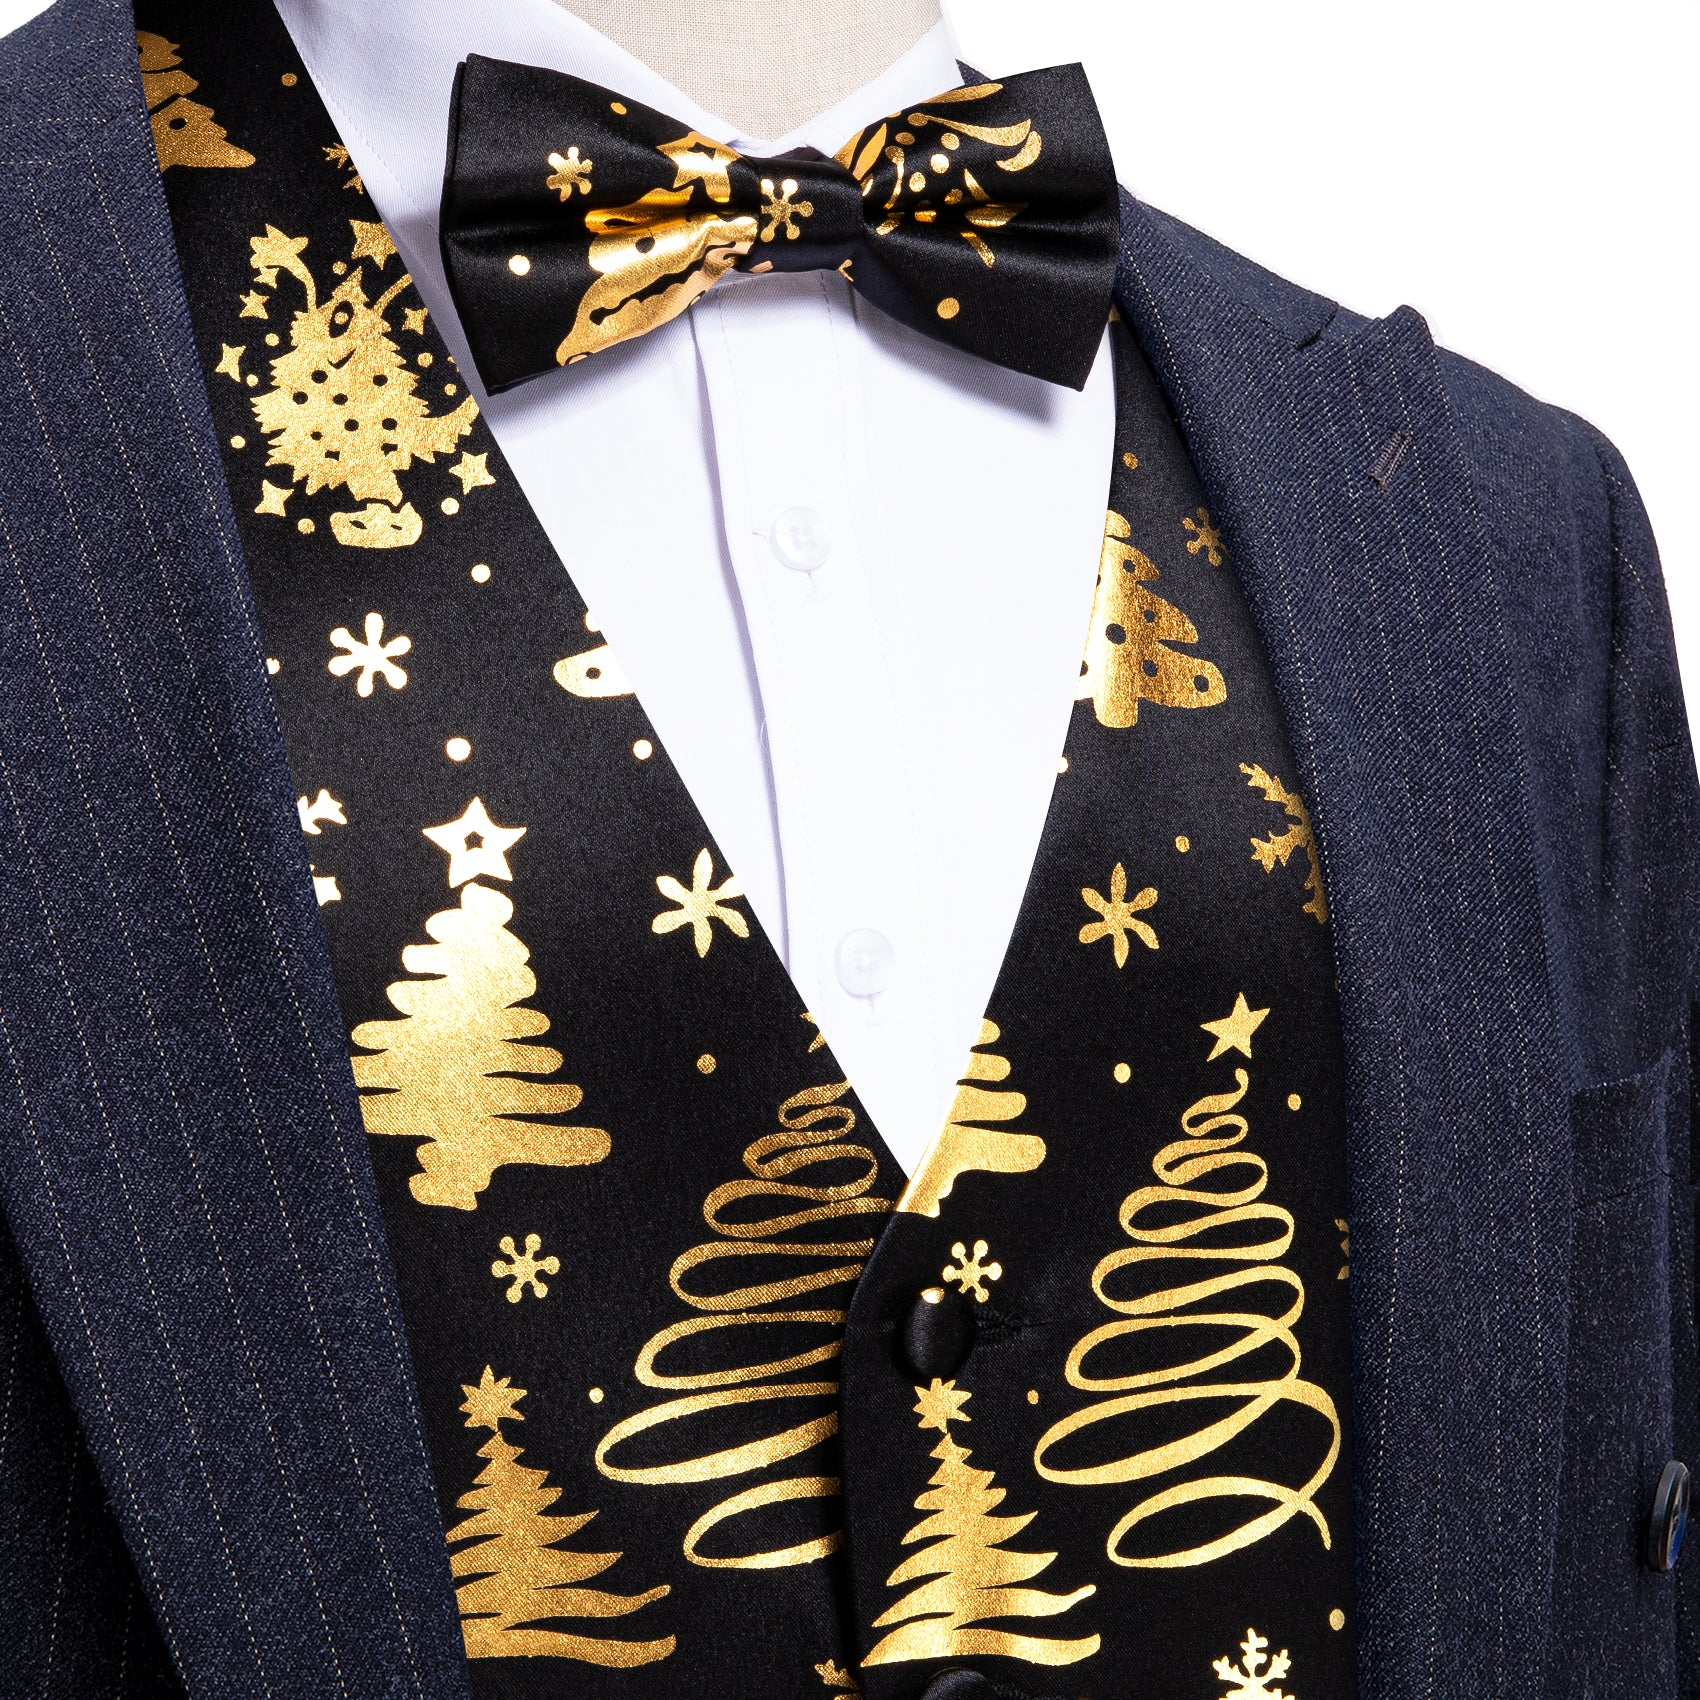 Christmas Black Gold Xmas Pattern Waistcoat Vest Bowtie Set